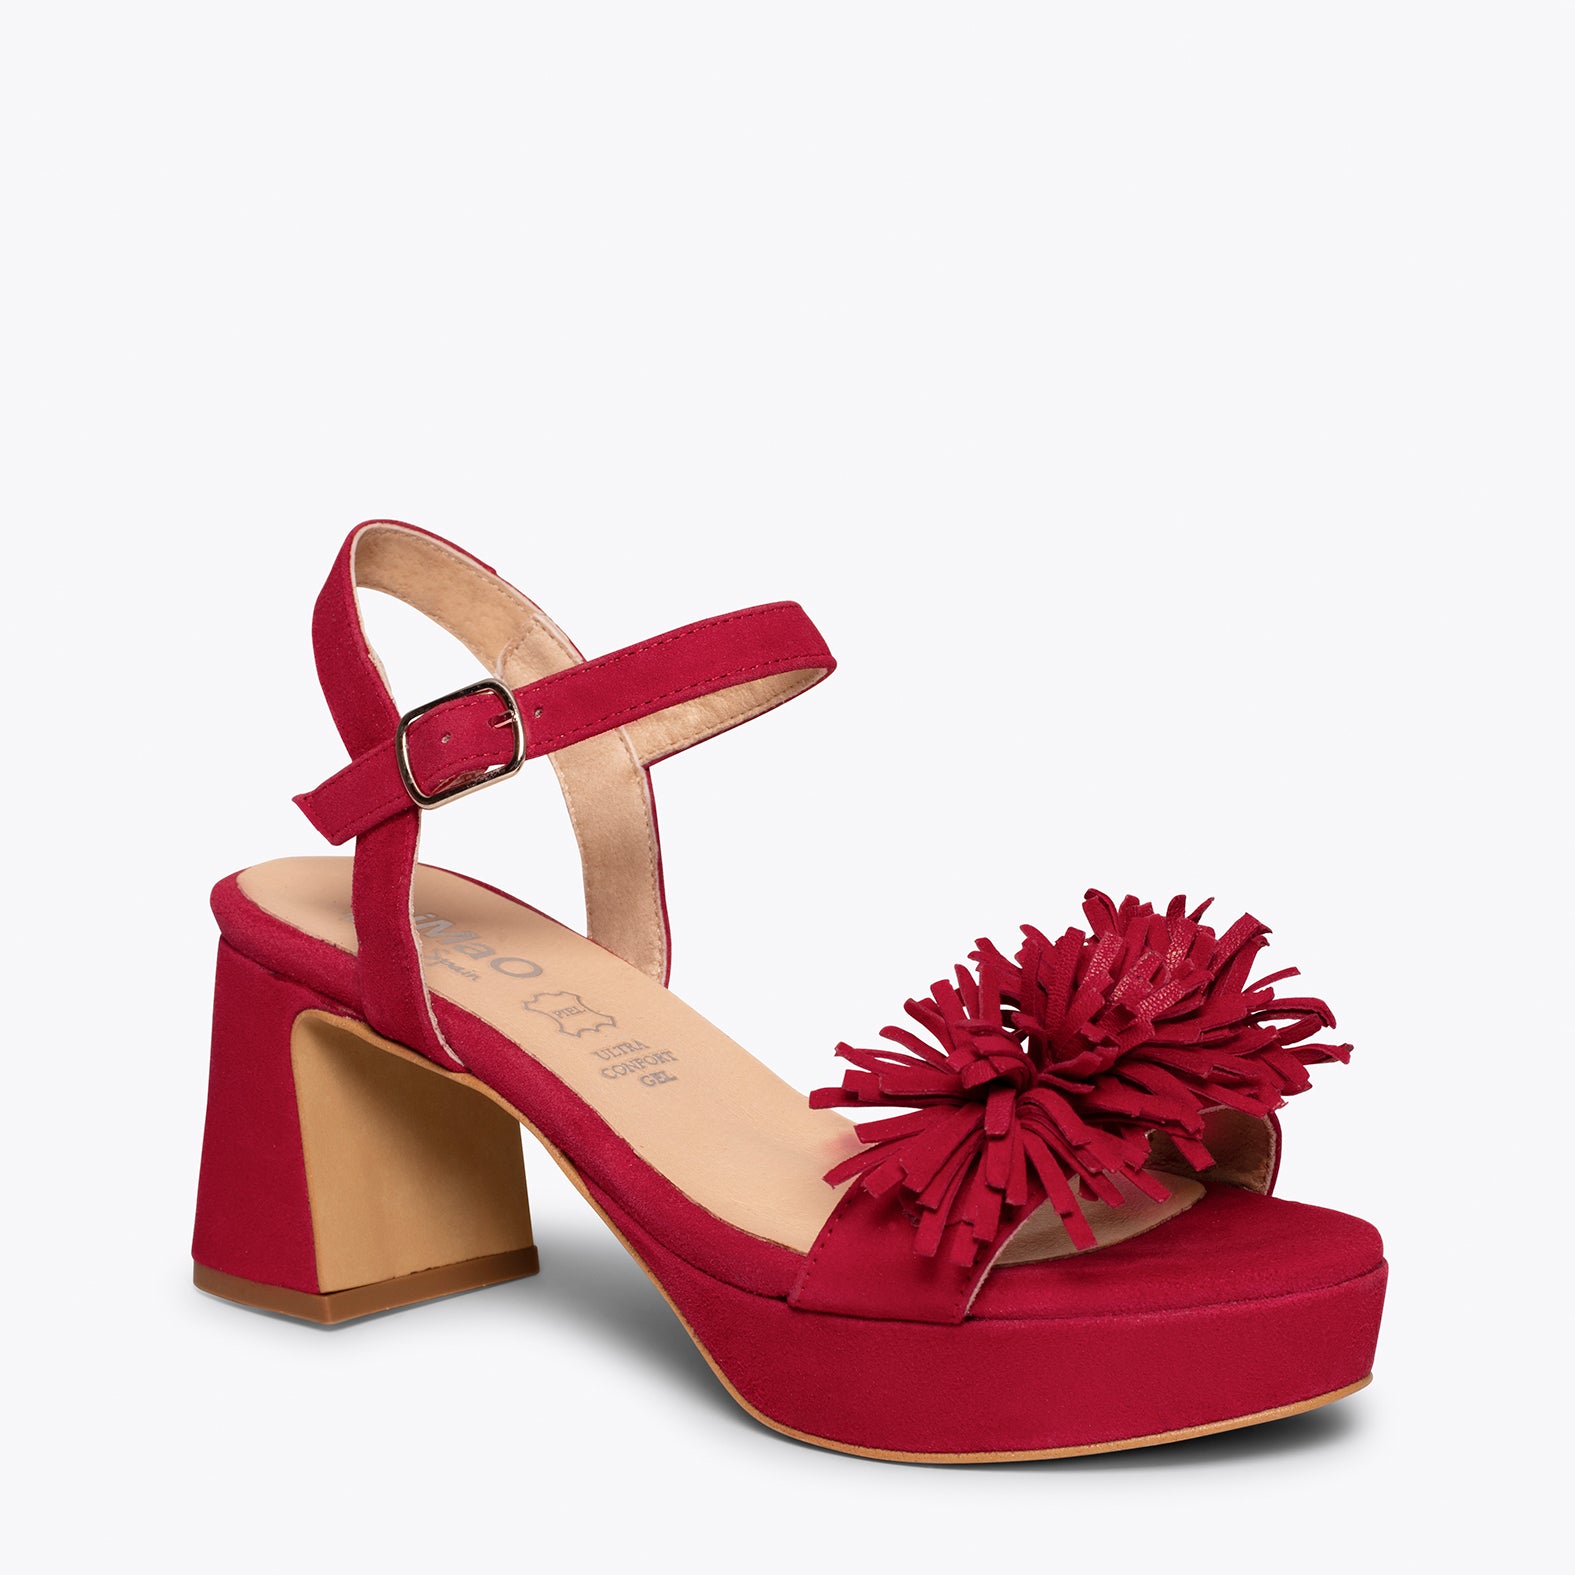 POMPOM – RED mid heel sandals with fringes